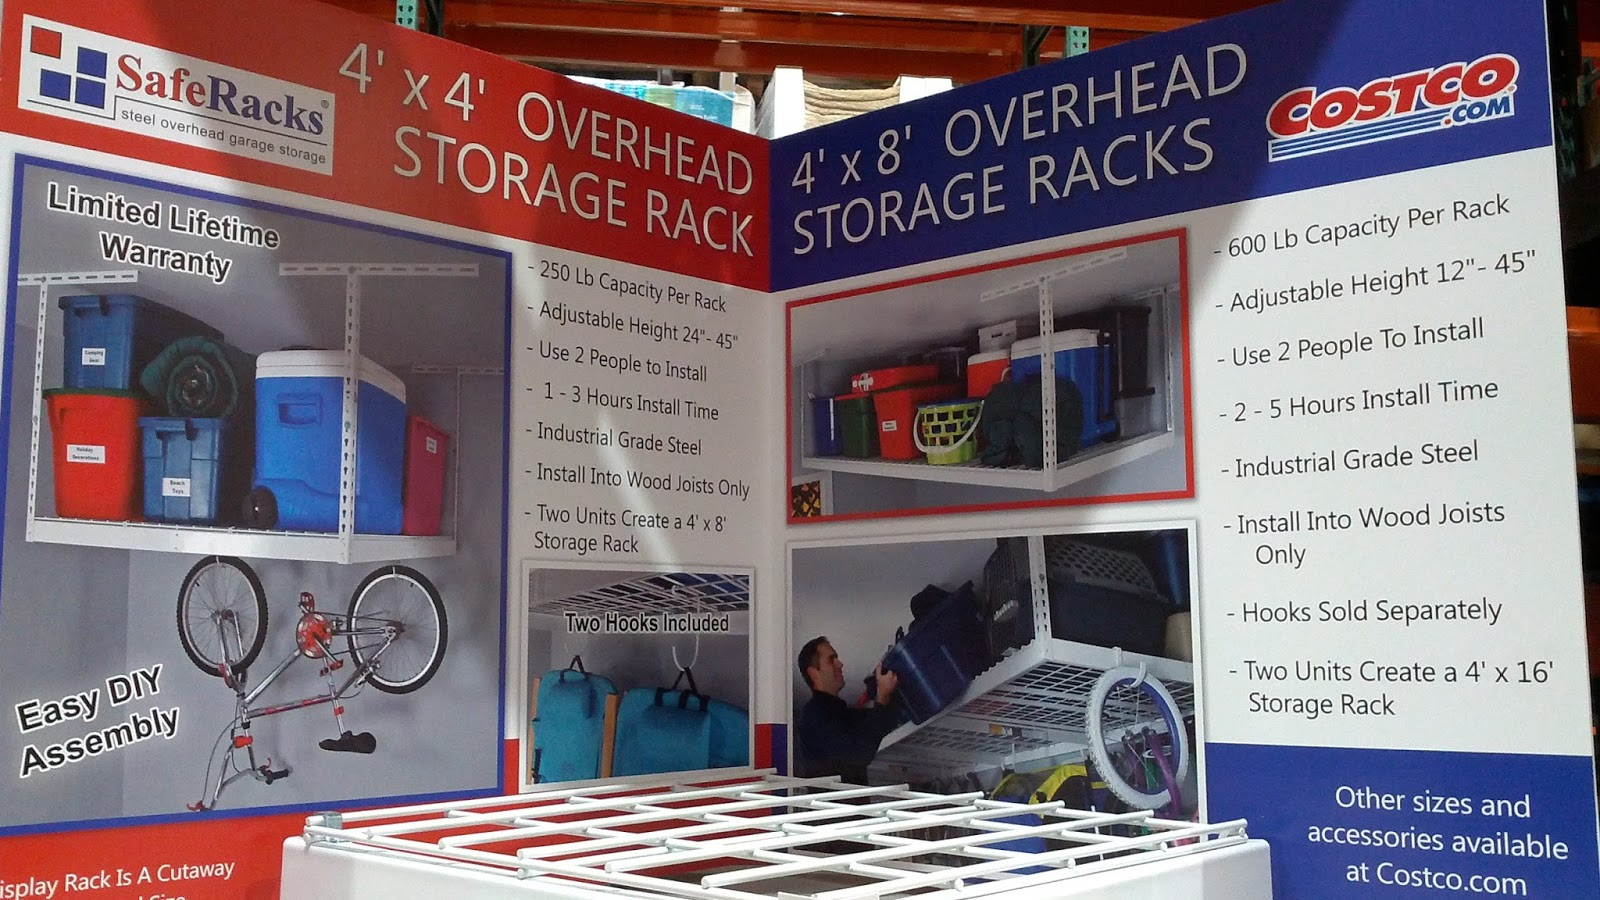 Best ideas about Overhead Garage Storage Costco
. Save or Pin Saferacks Storage Kit Steel Overhead Garage Rack Now.